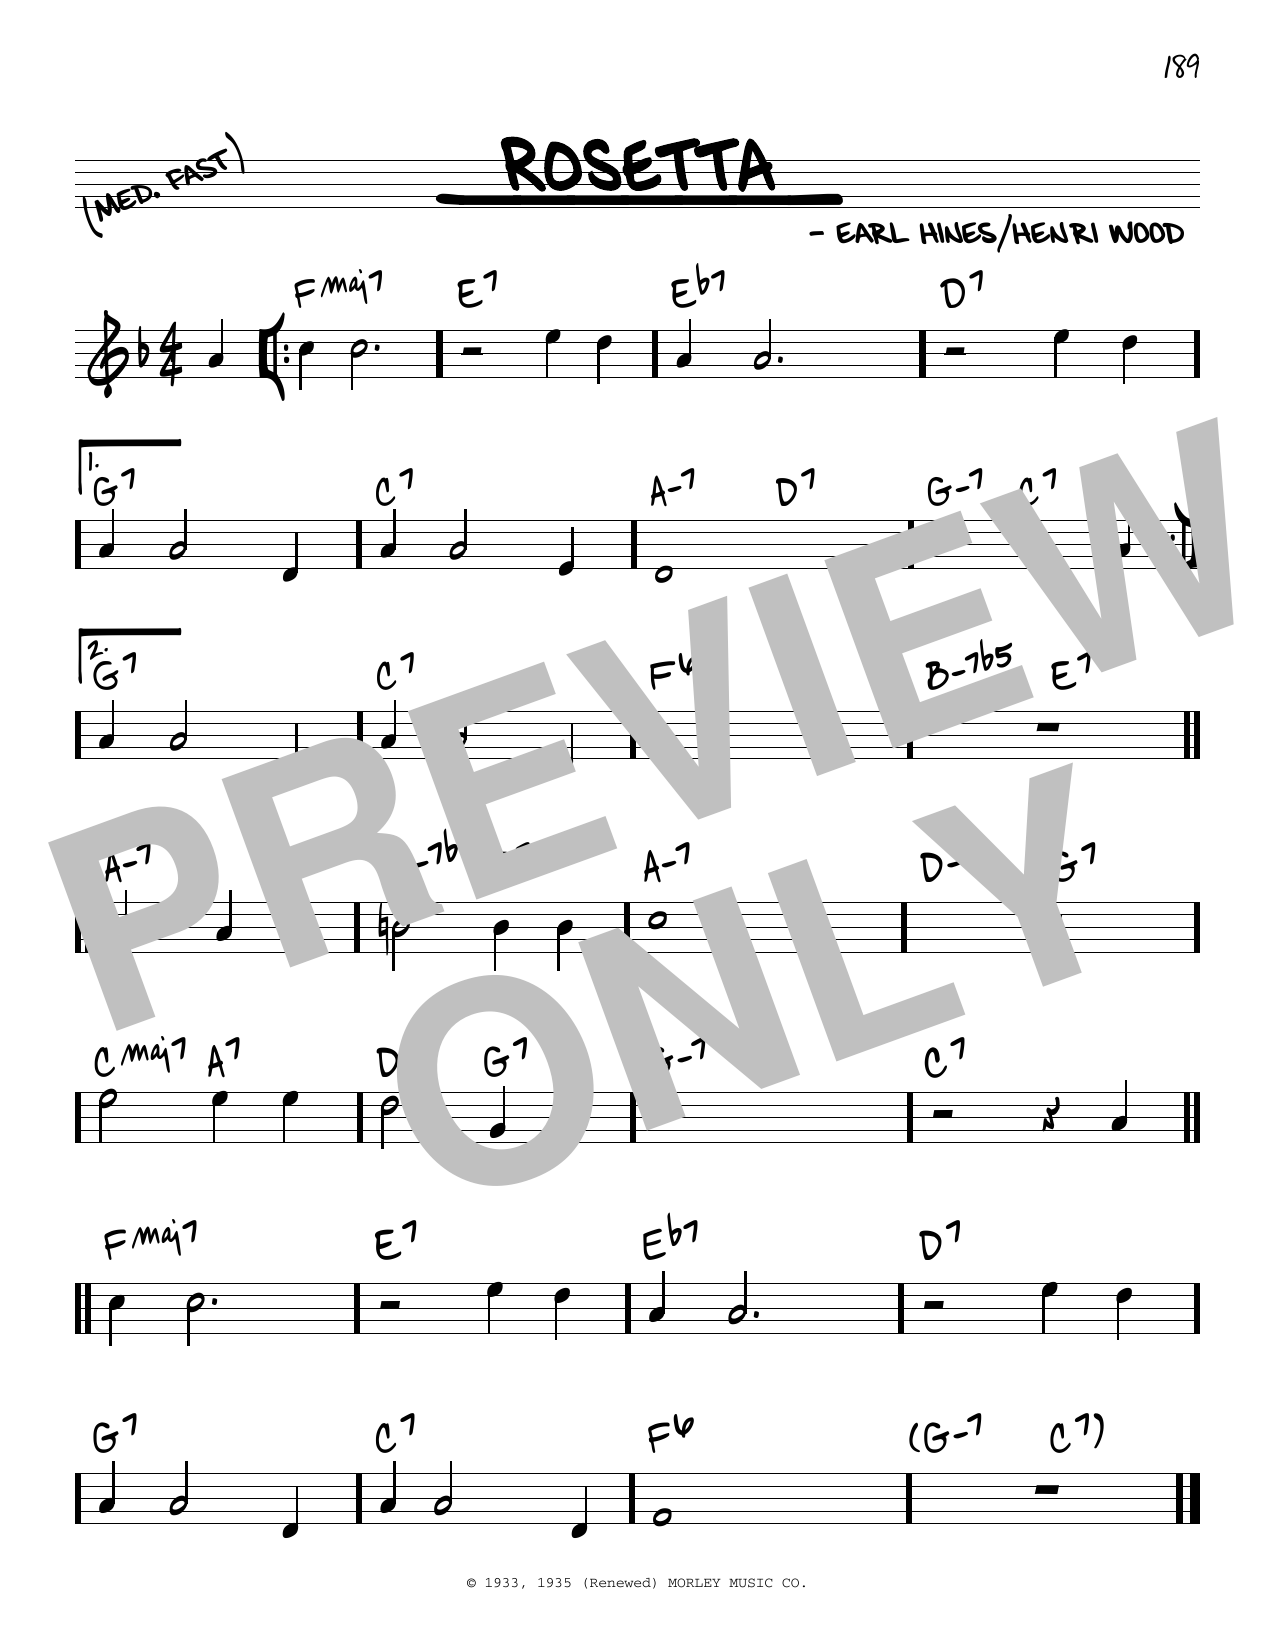 Download Earl Hines Rosetta Sheet Music